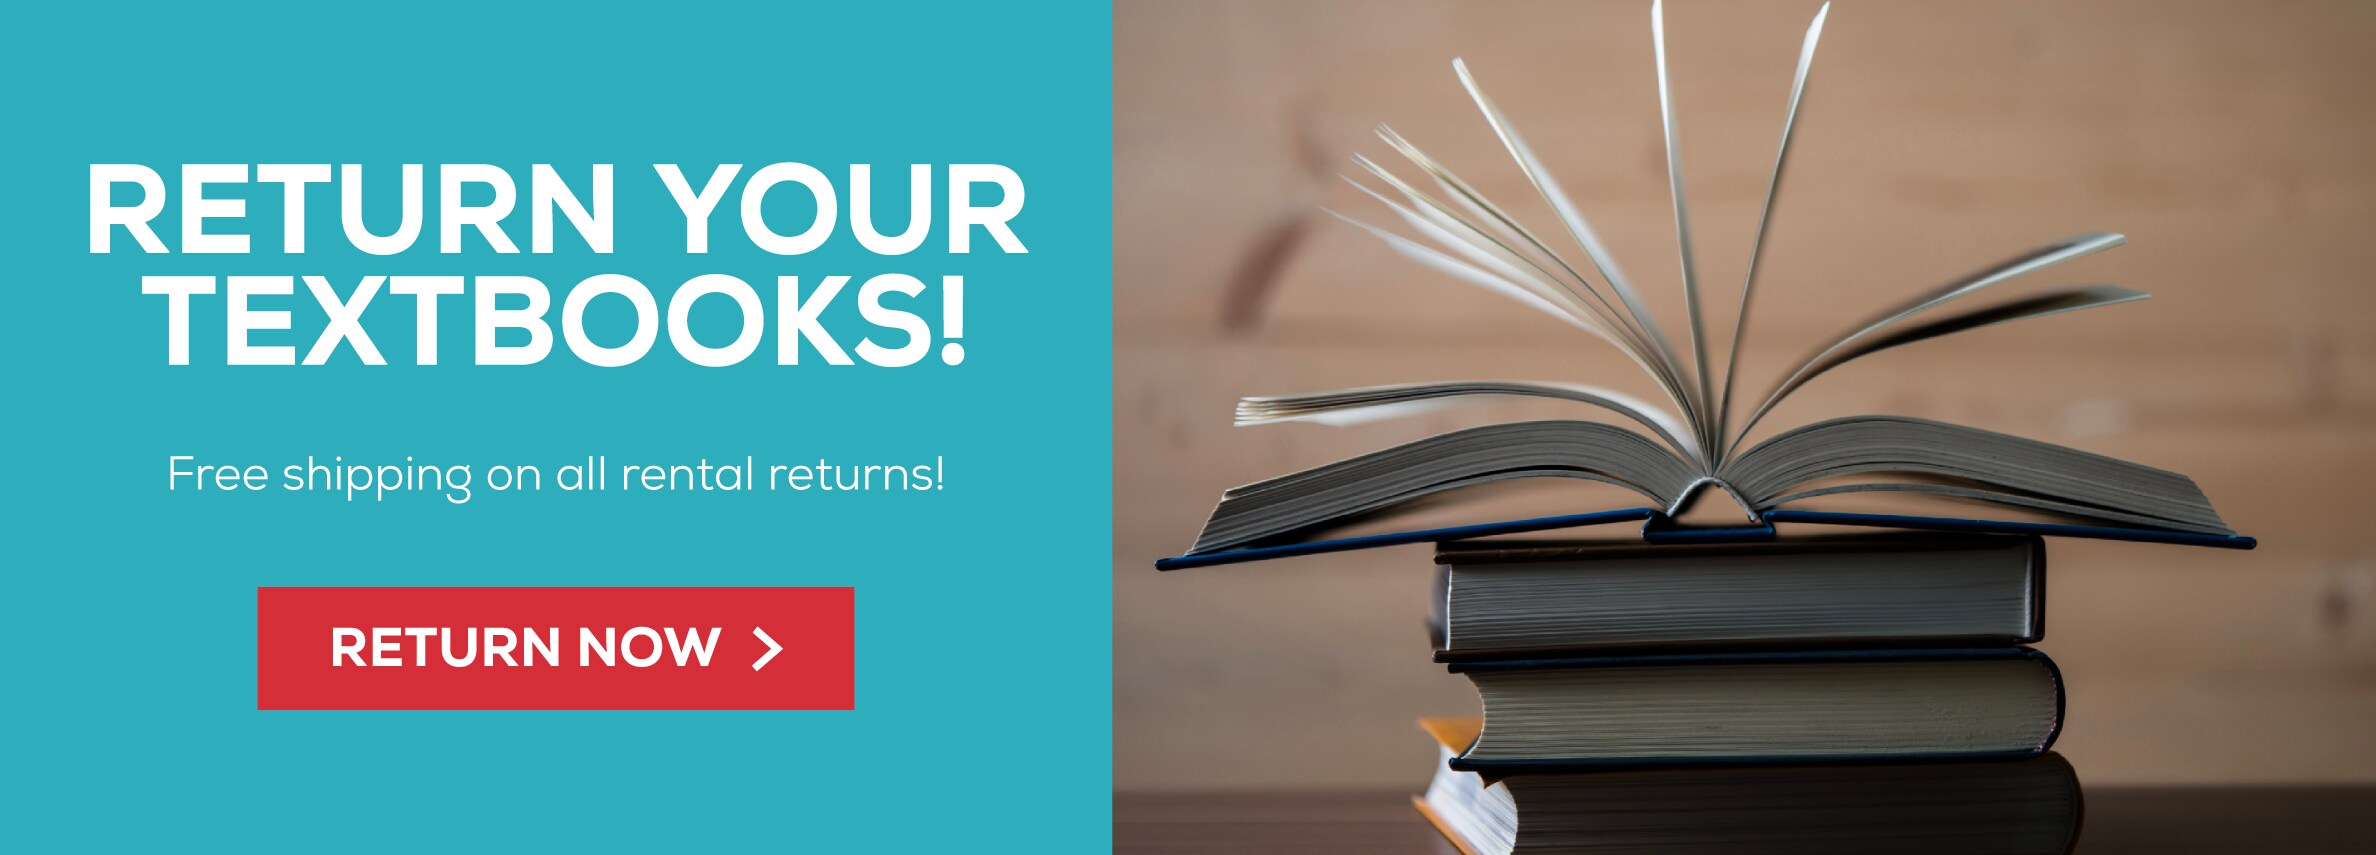 Return Your Textbooks, Free shipping on all rental returns!, Return Now